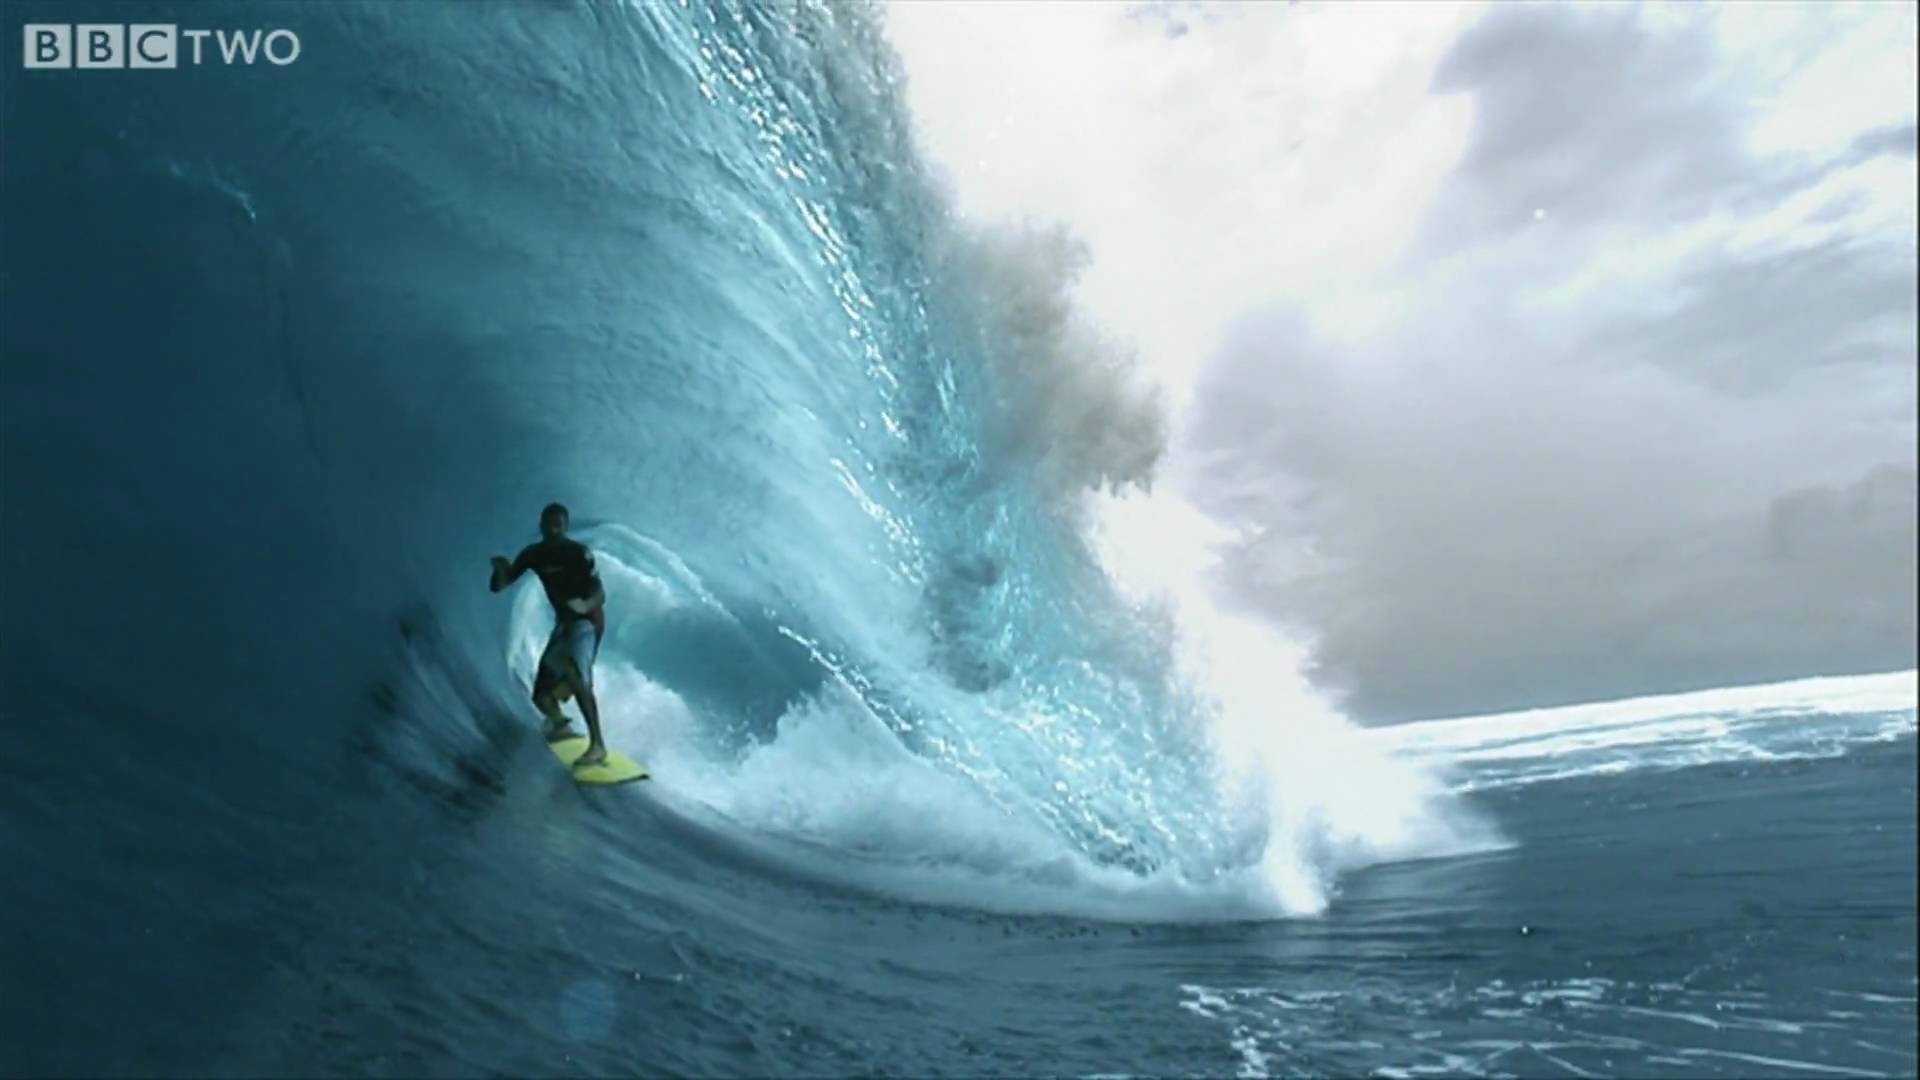 HD: Super Slo-mo Surfer! - South Pacific - BBC Two - YouTube